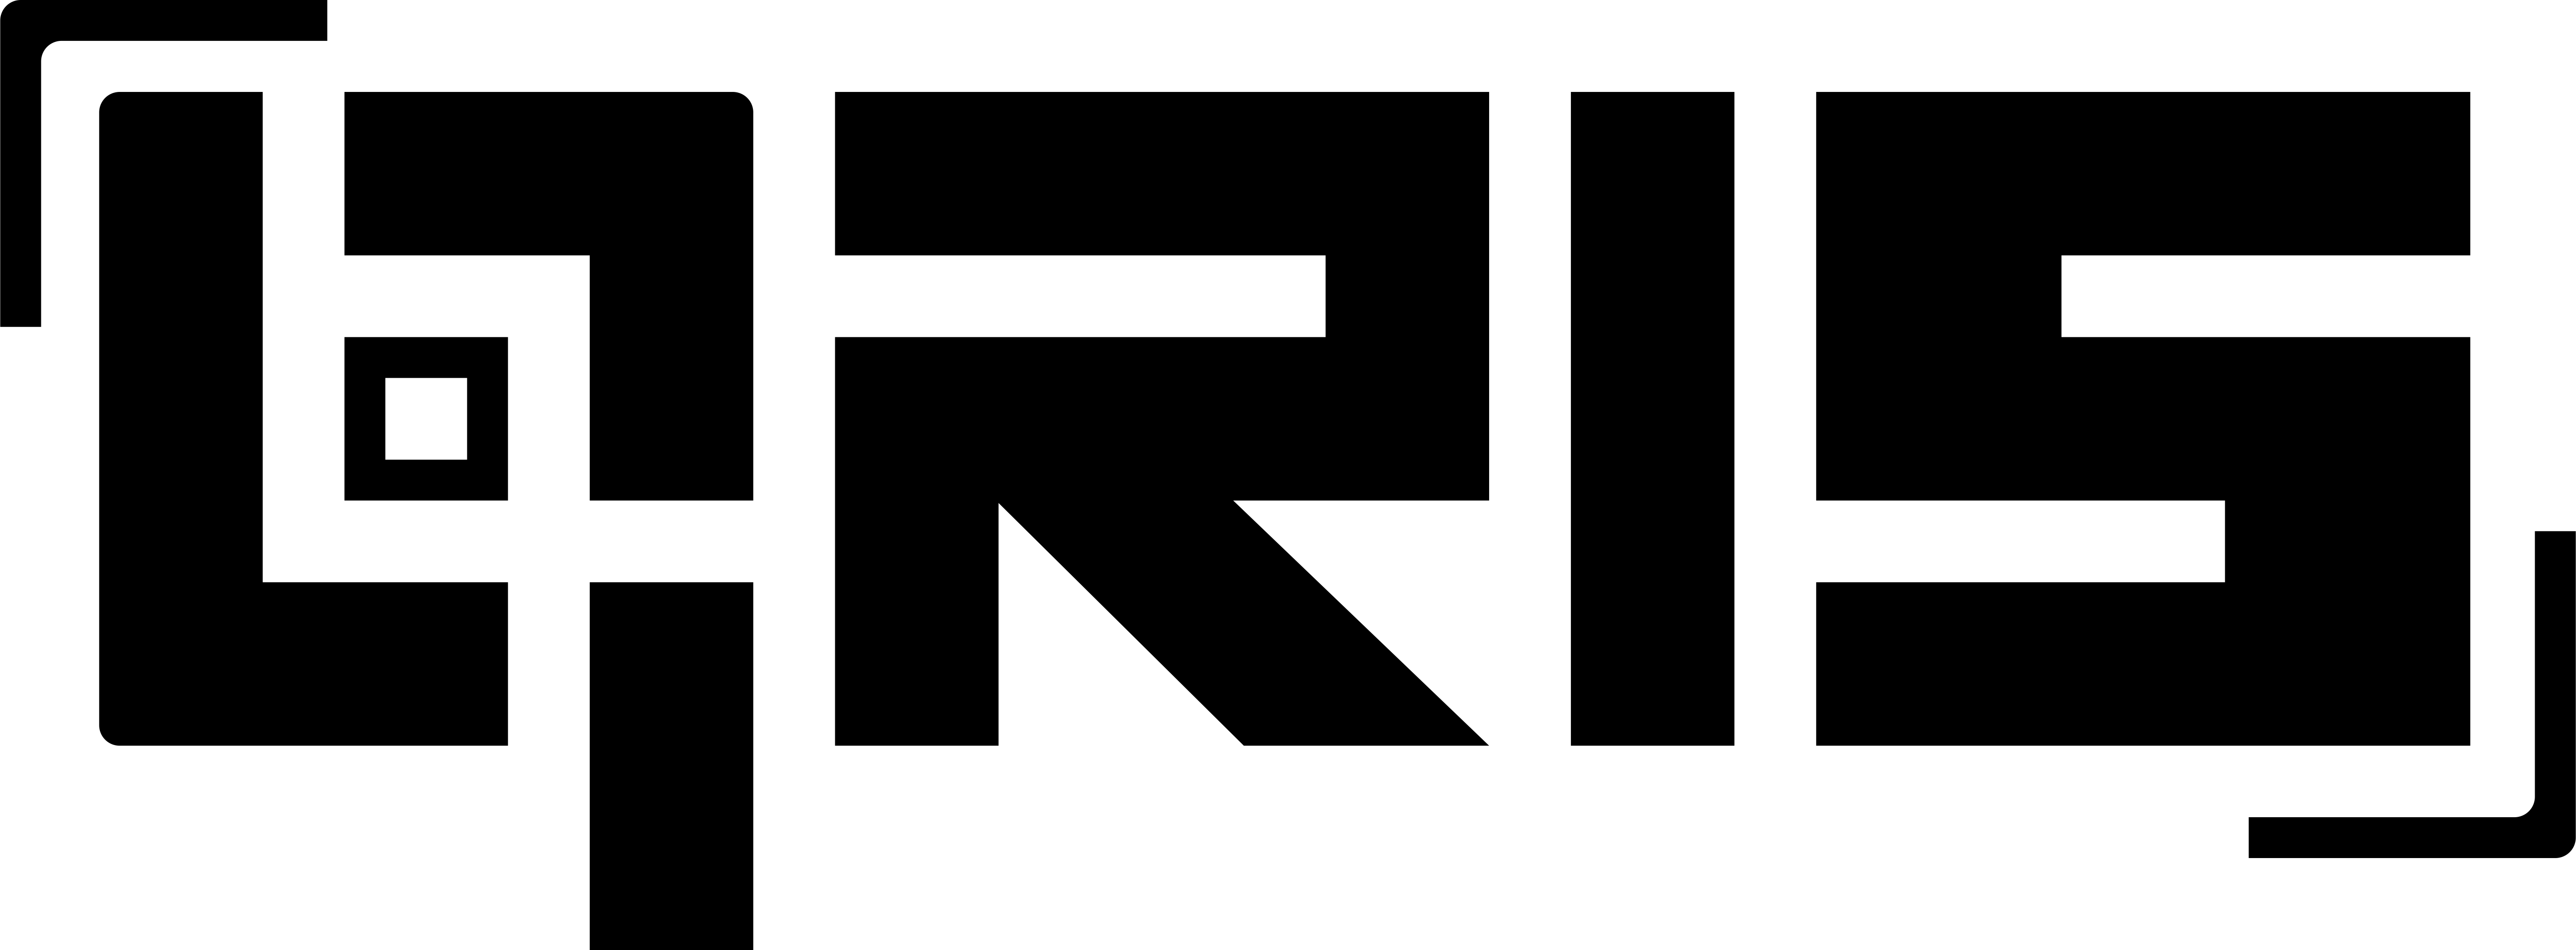 QR С логотипом. Qris logo. EKASSIR лого. GAISF лого.